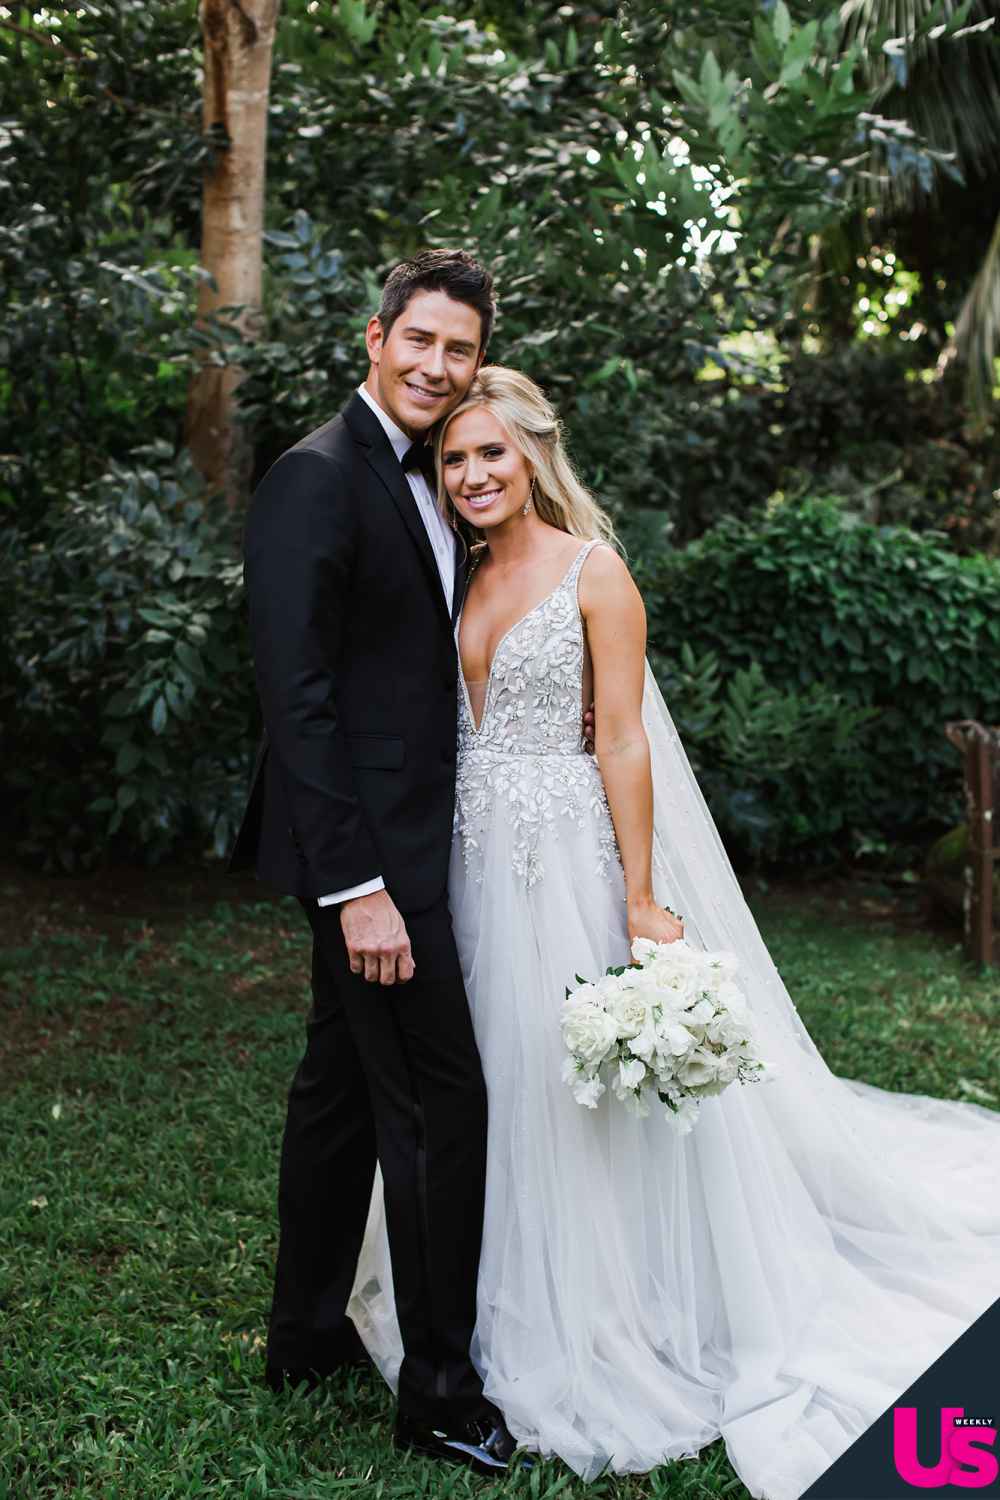 Vanessa Morgan Got Married in a Stunning Lace Wedding Dress